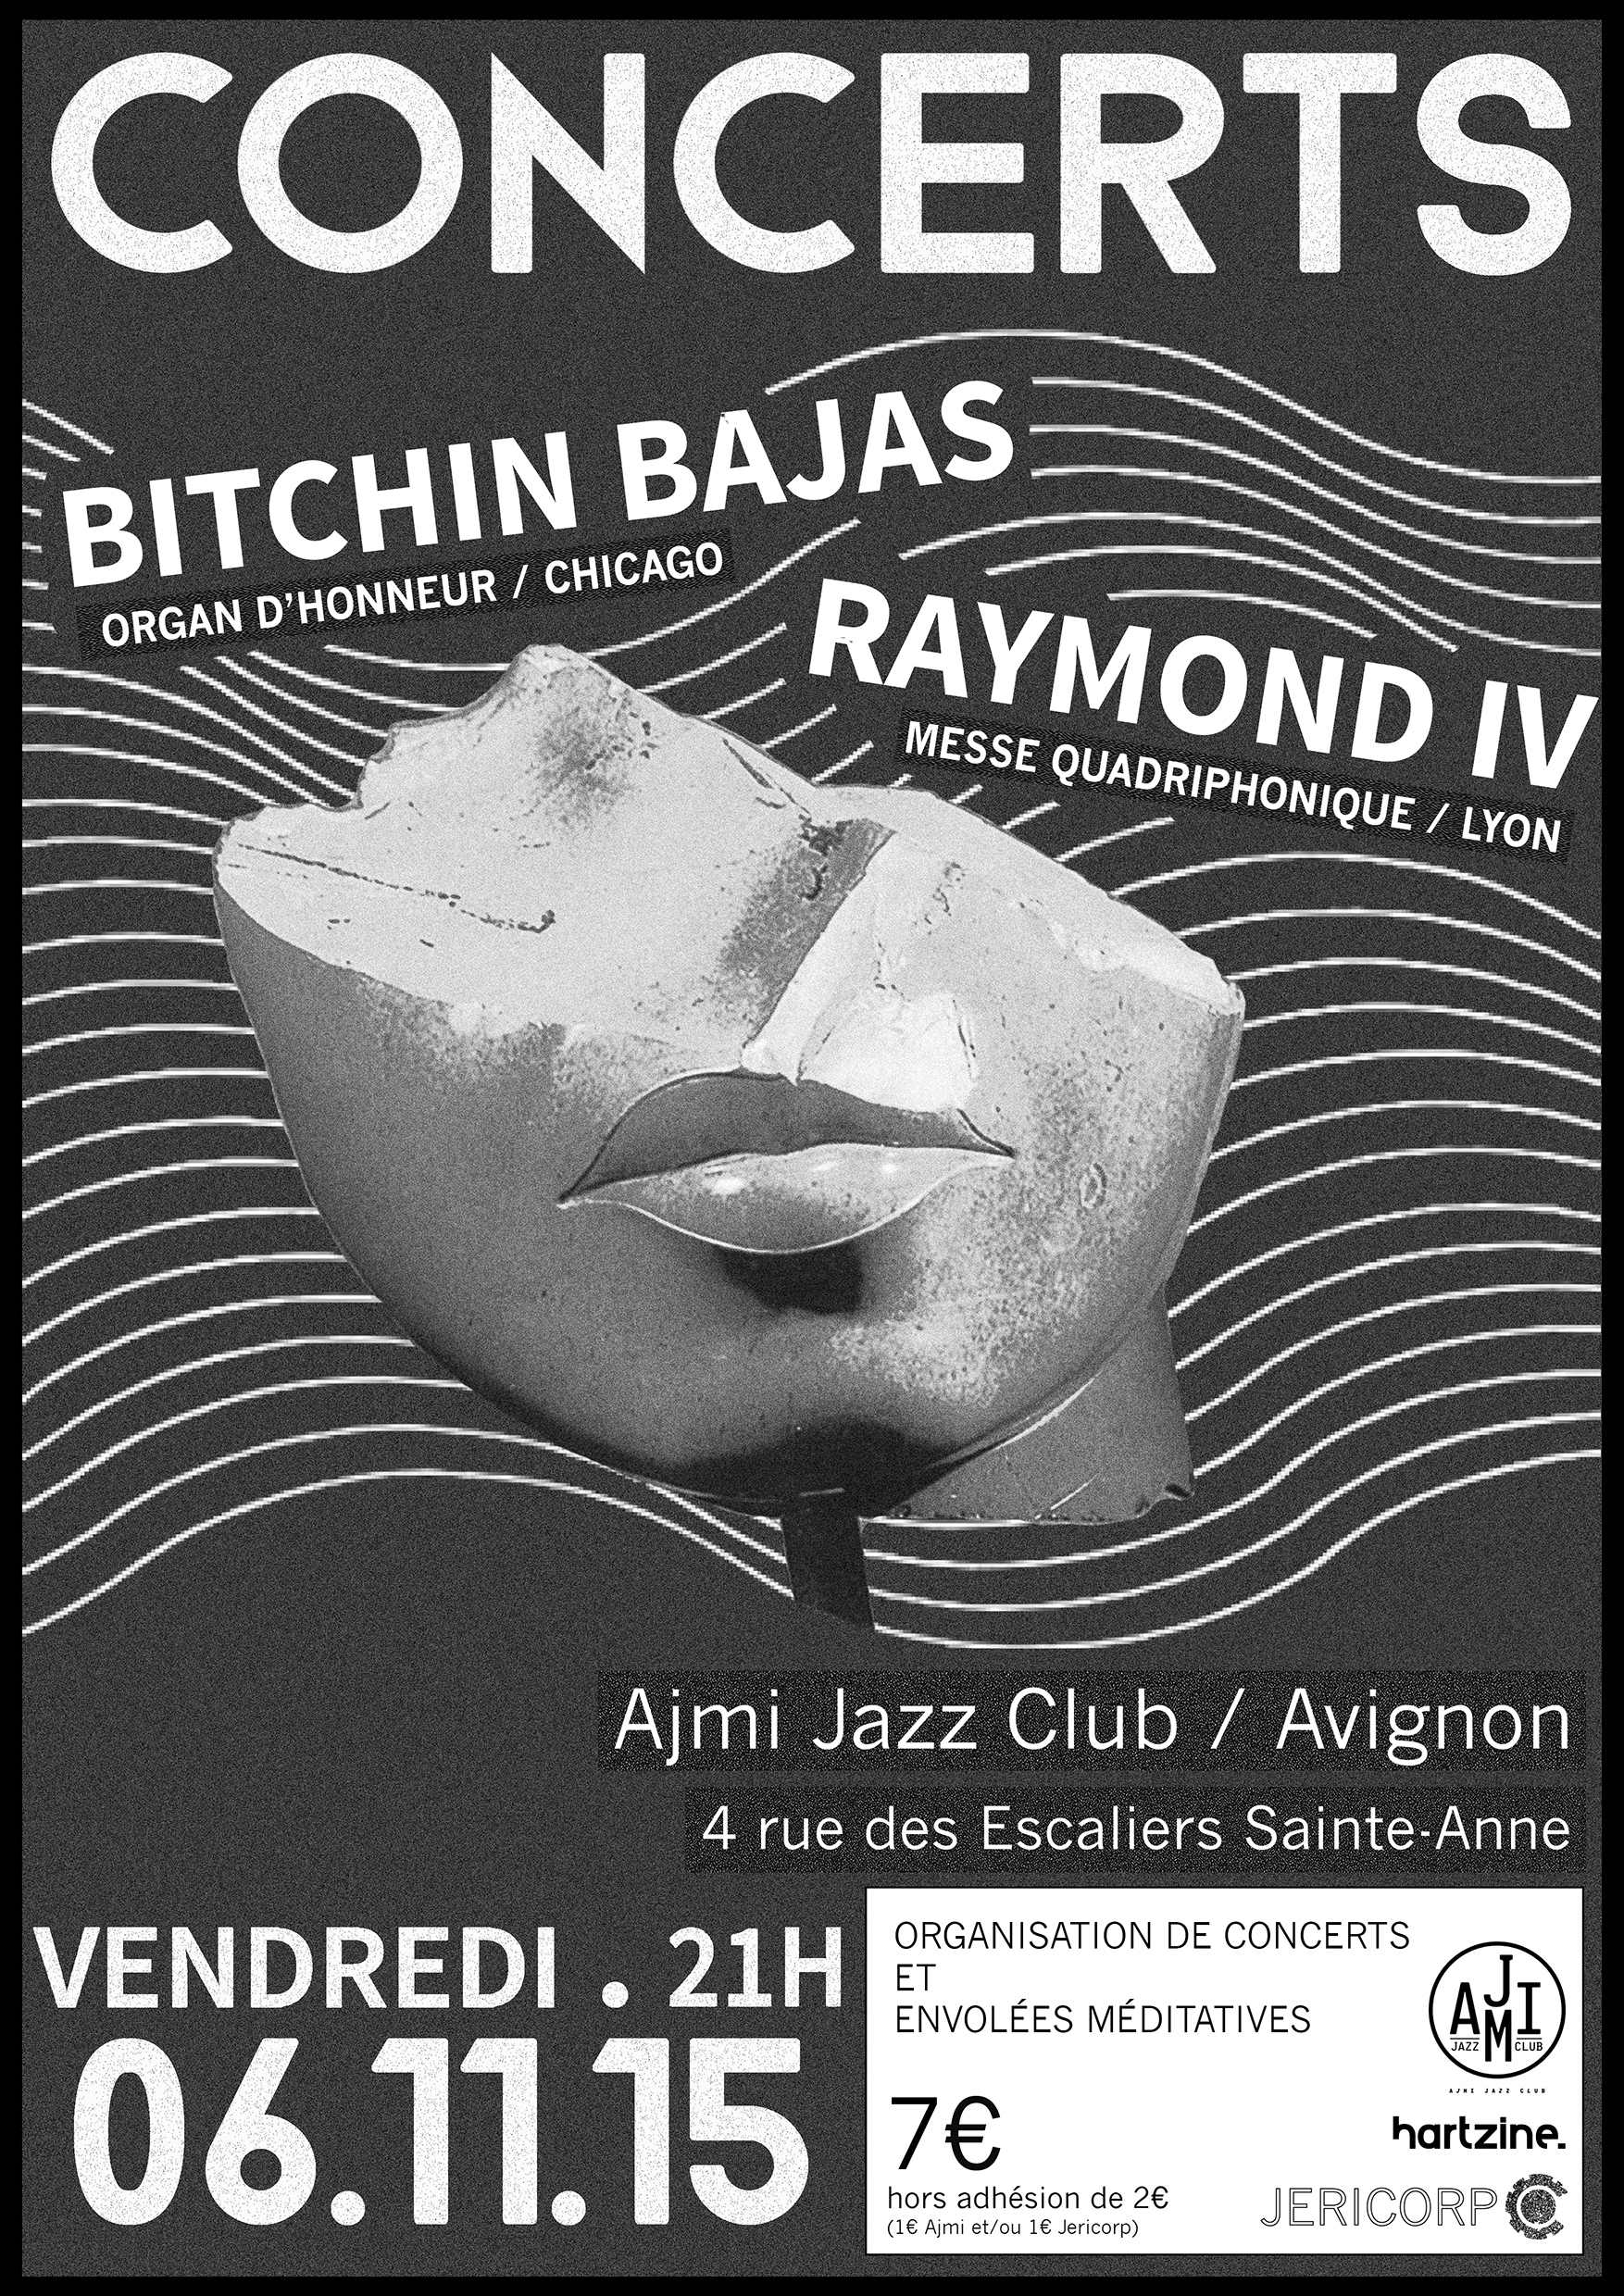 Bitchin Bajas + Raymond IV